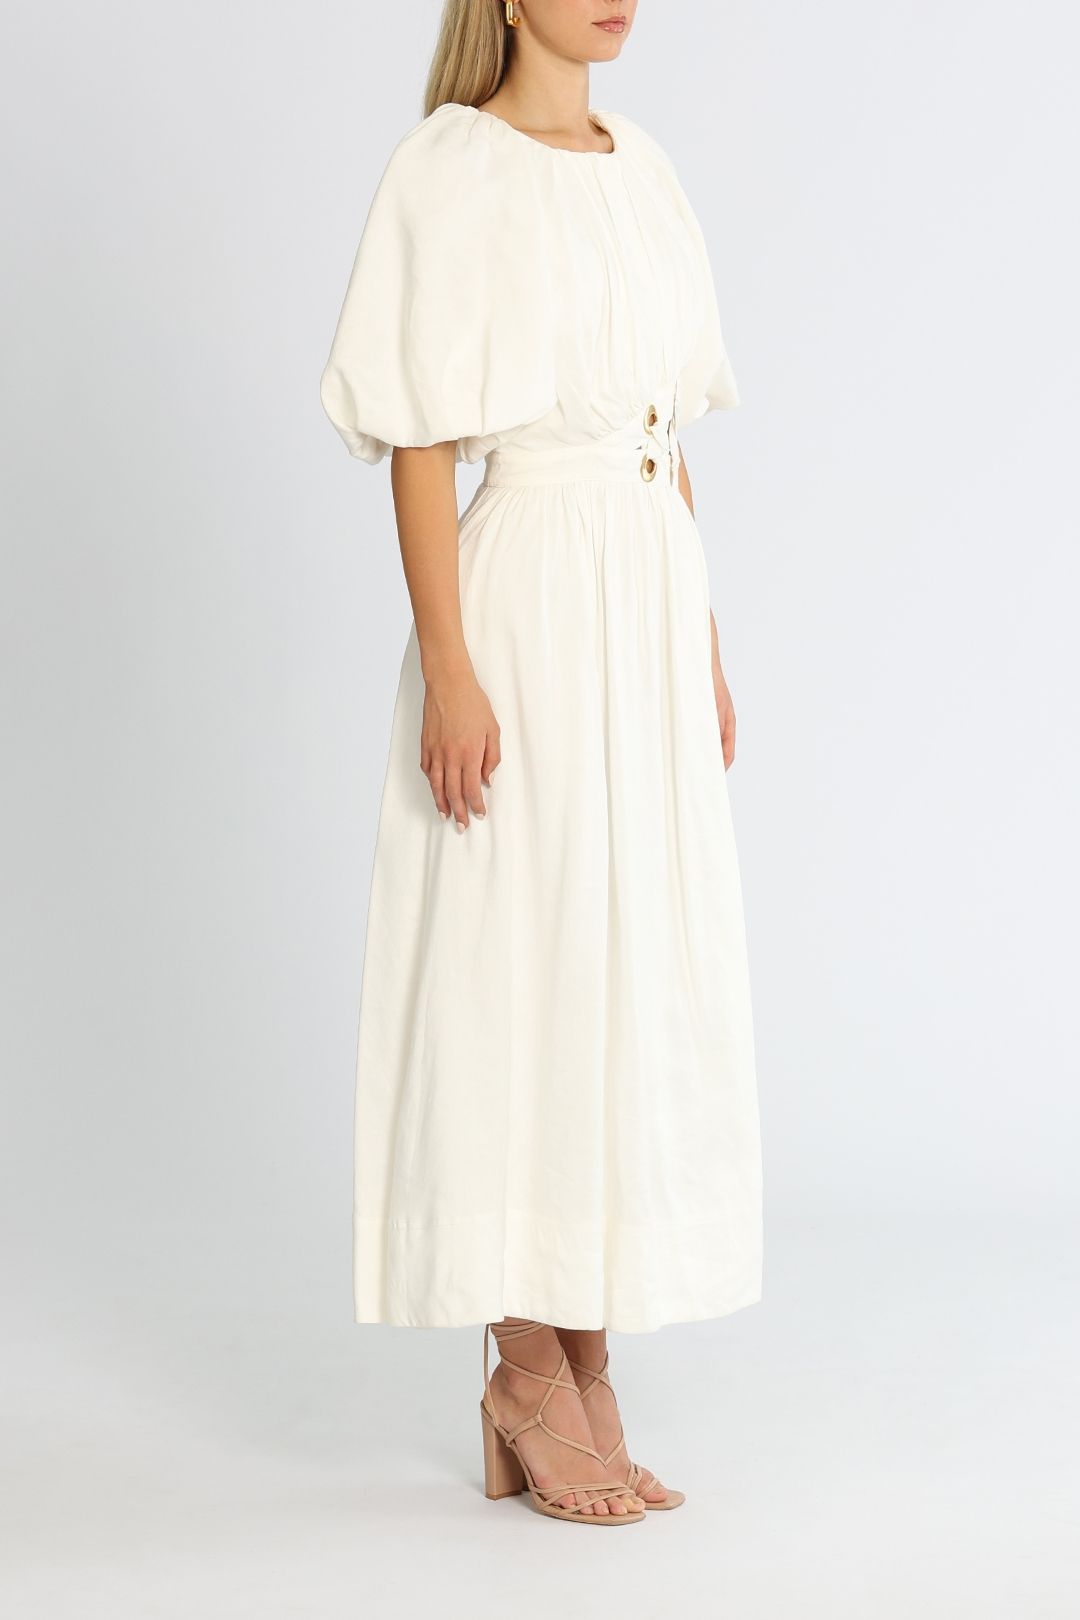 AJE Virtuous Asymmetric Midi Dress Ivory Lace